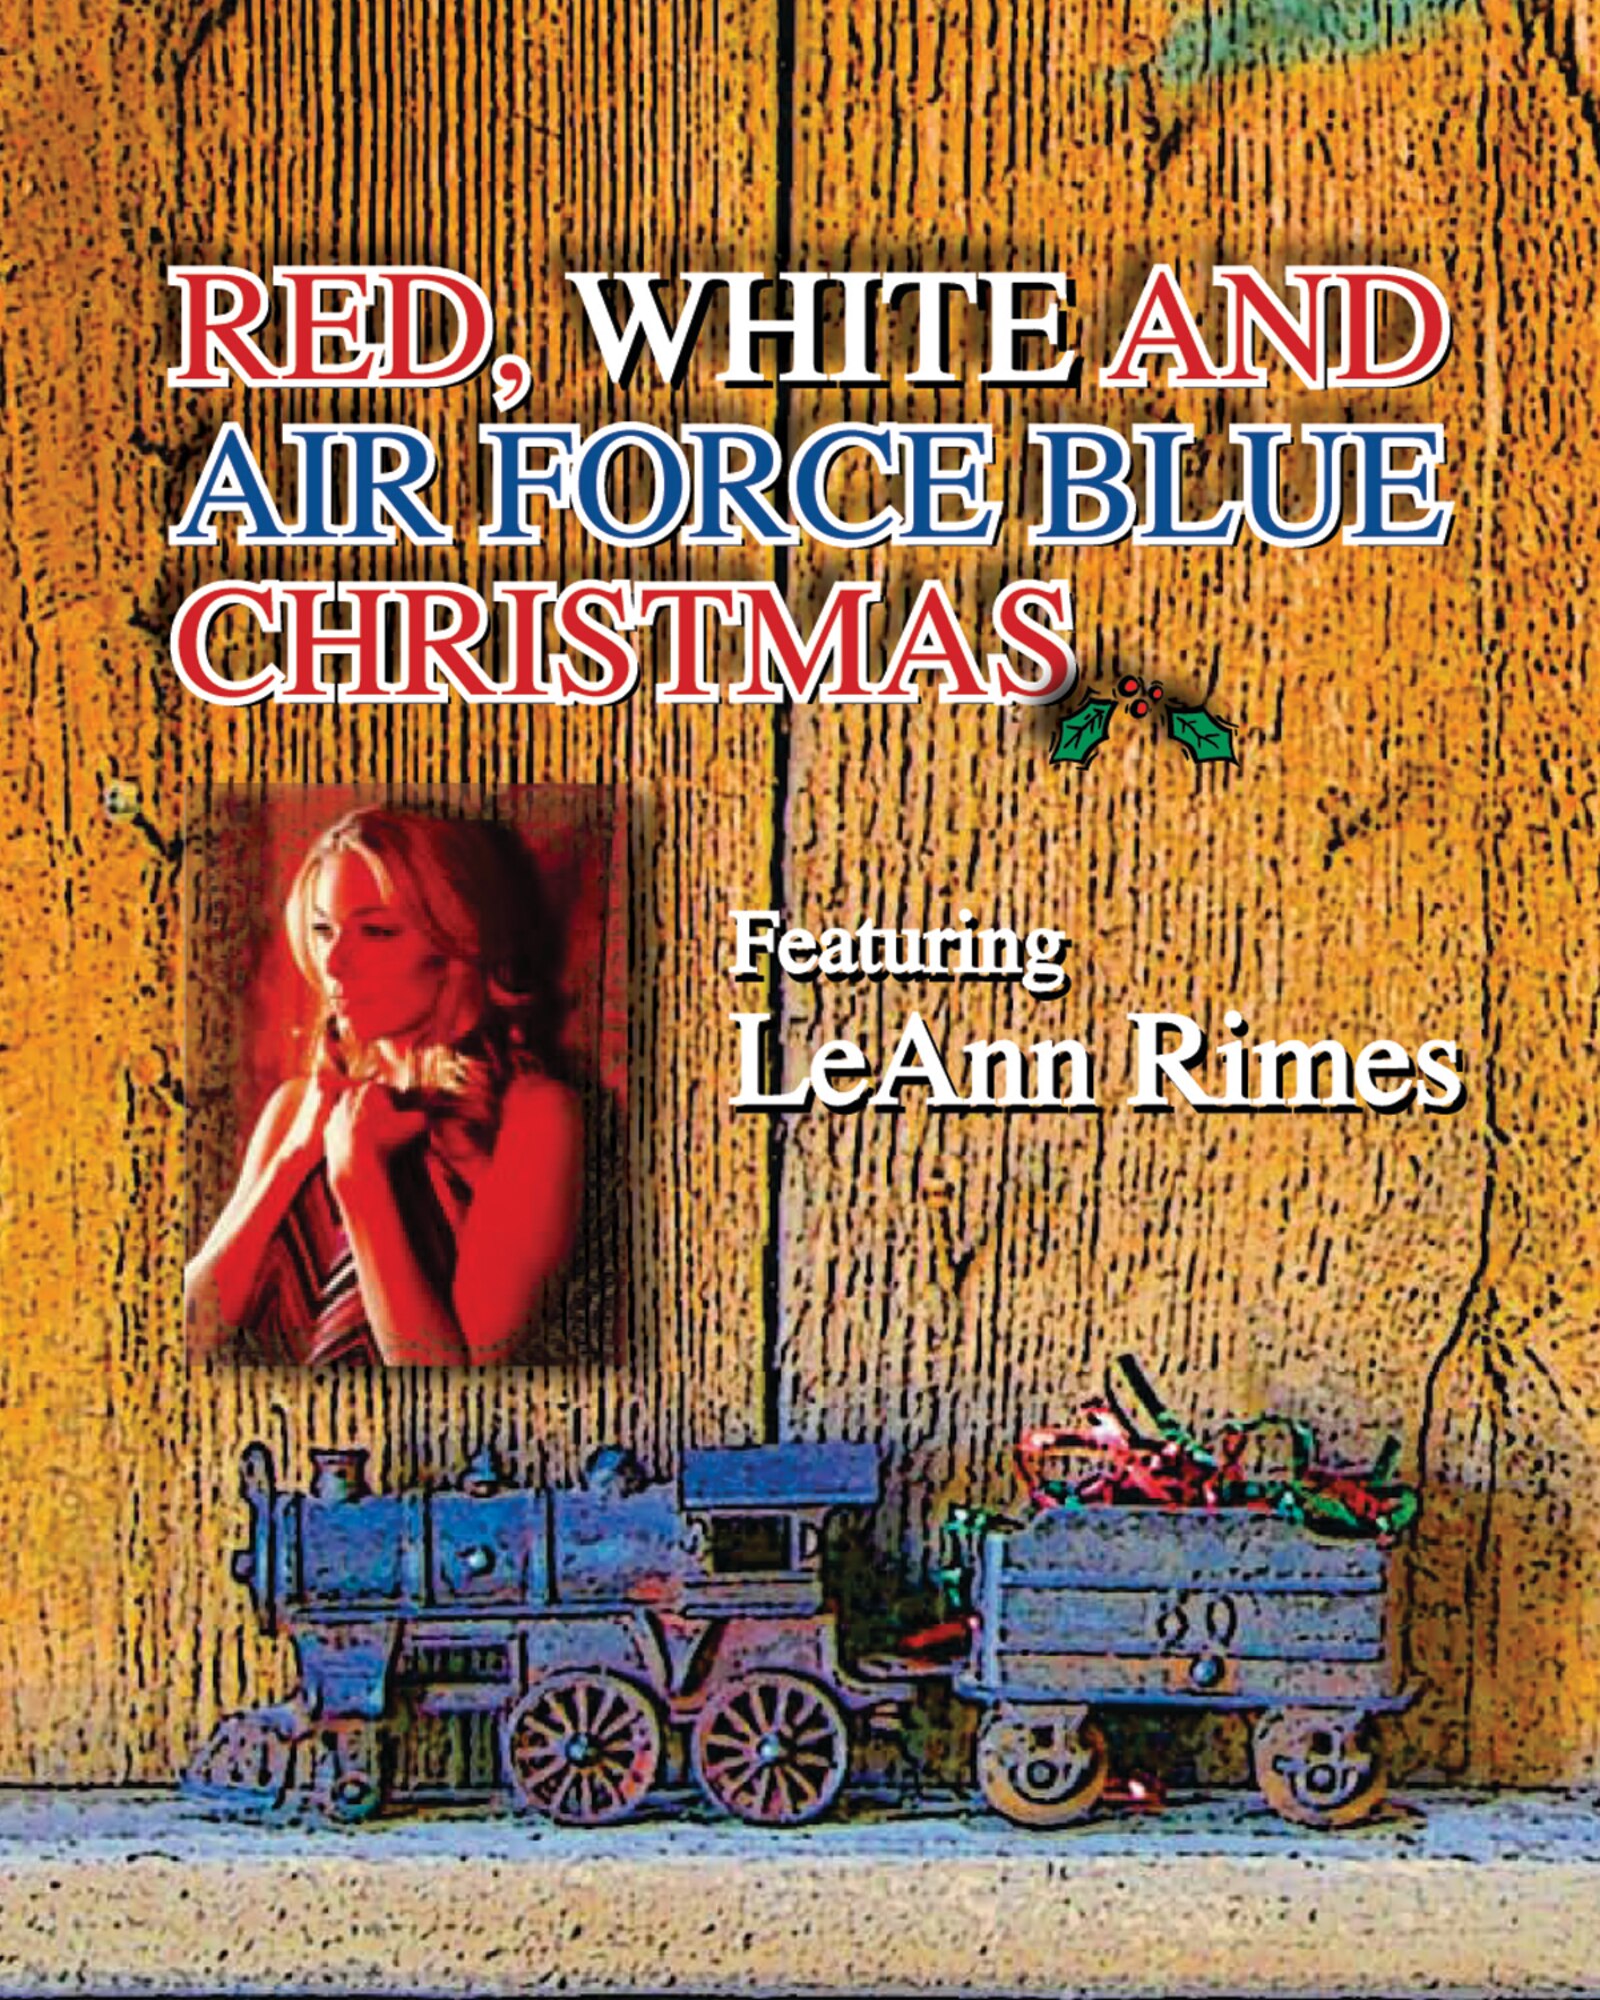 Cover art for the 2007 Red, White and Air Force Blue Christmas radio program featuring LeAnn Rimes.  (Designer/Ronn Linn)